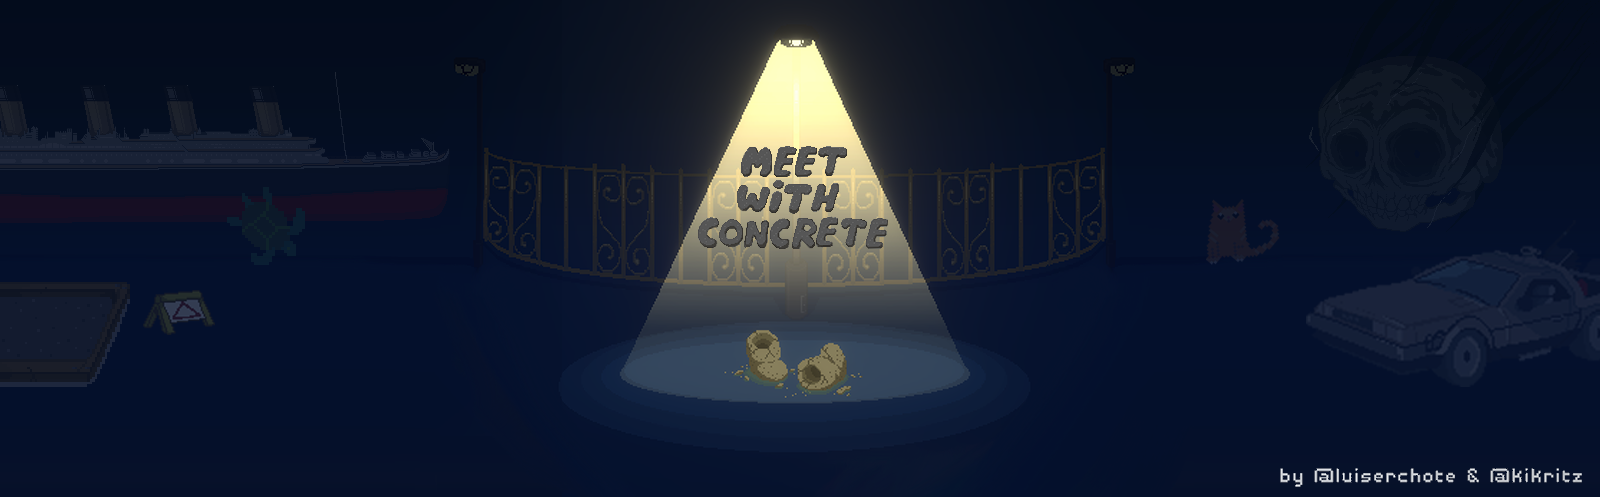 Meet With Concrete